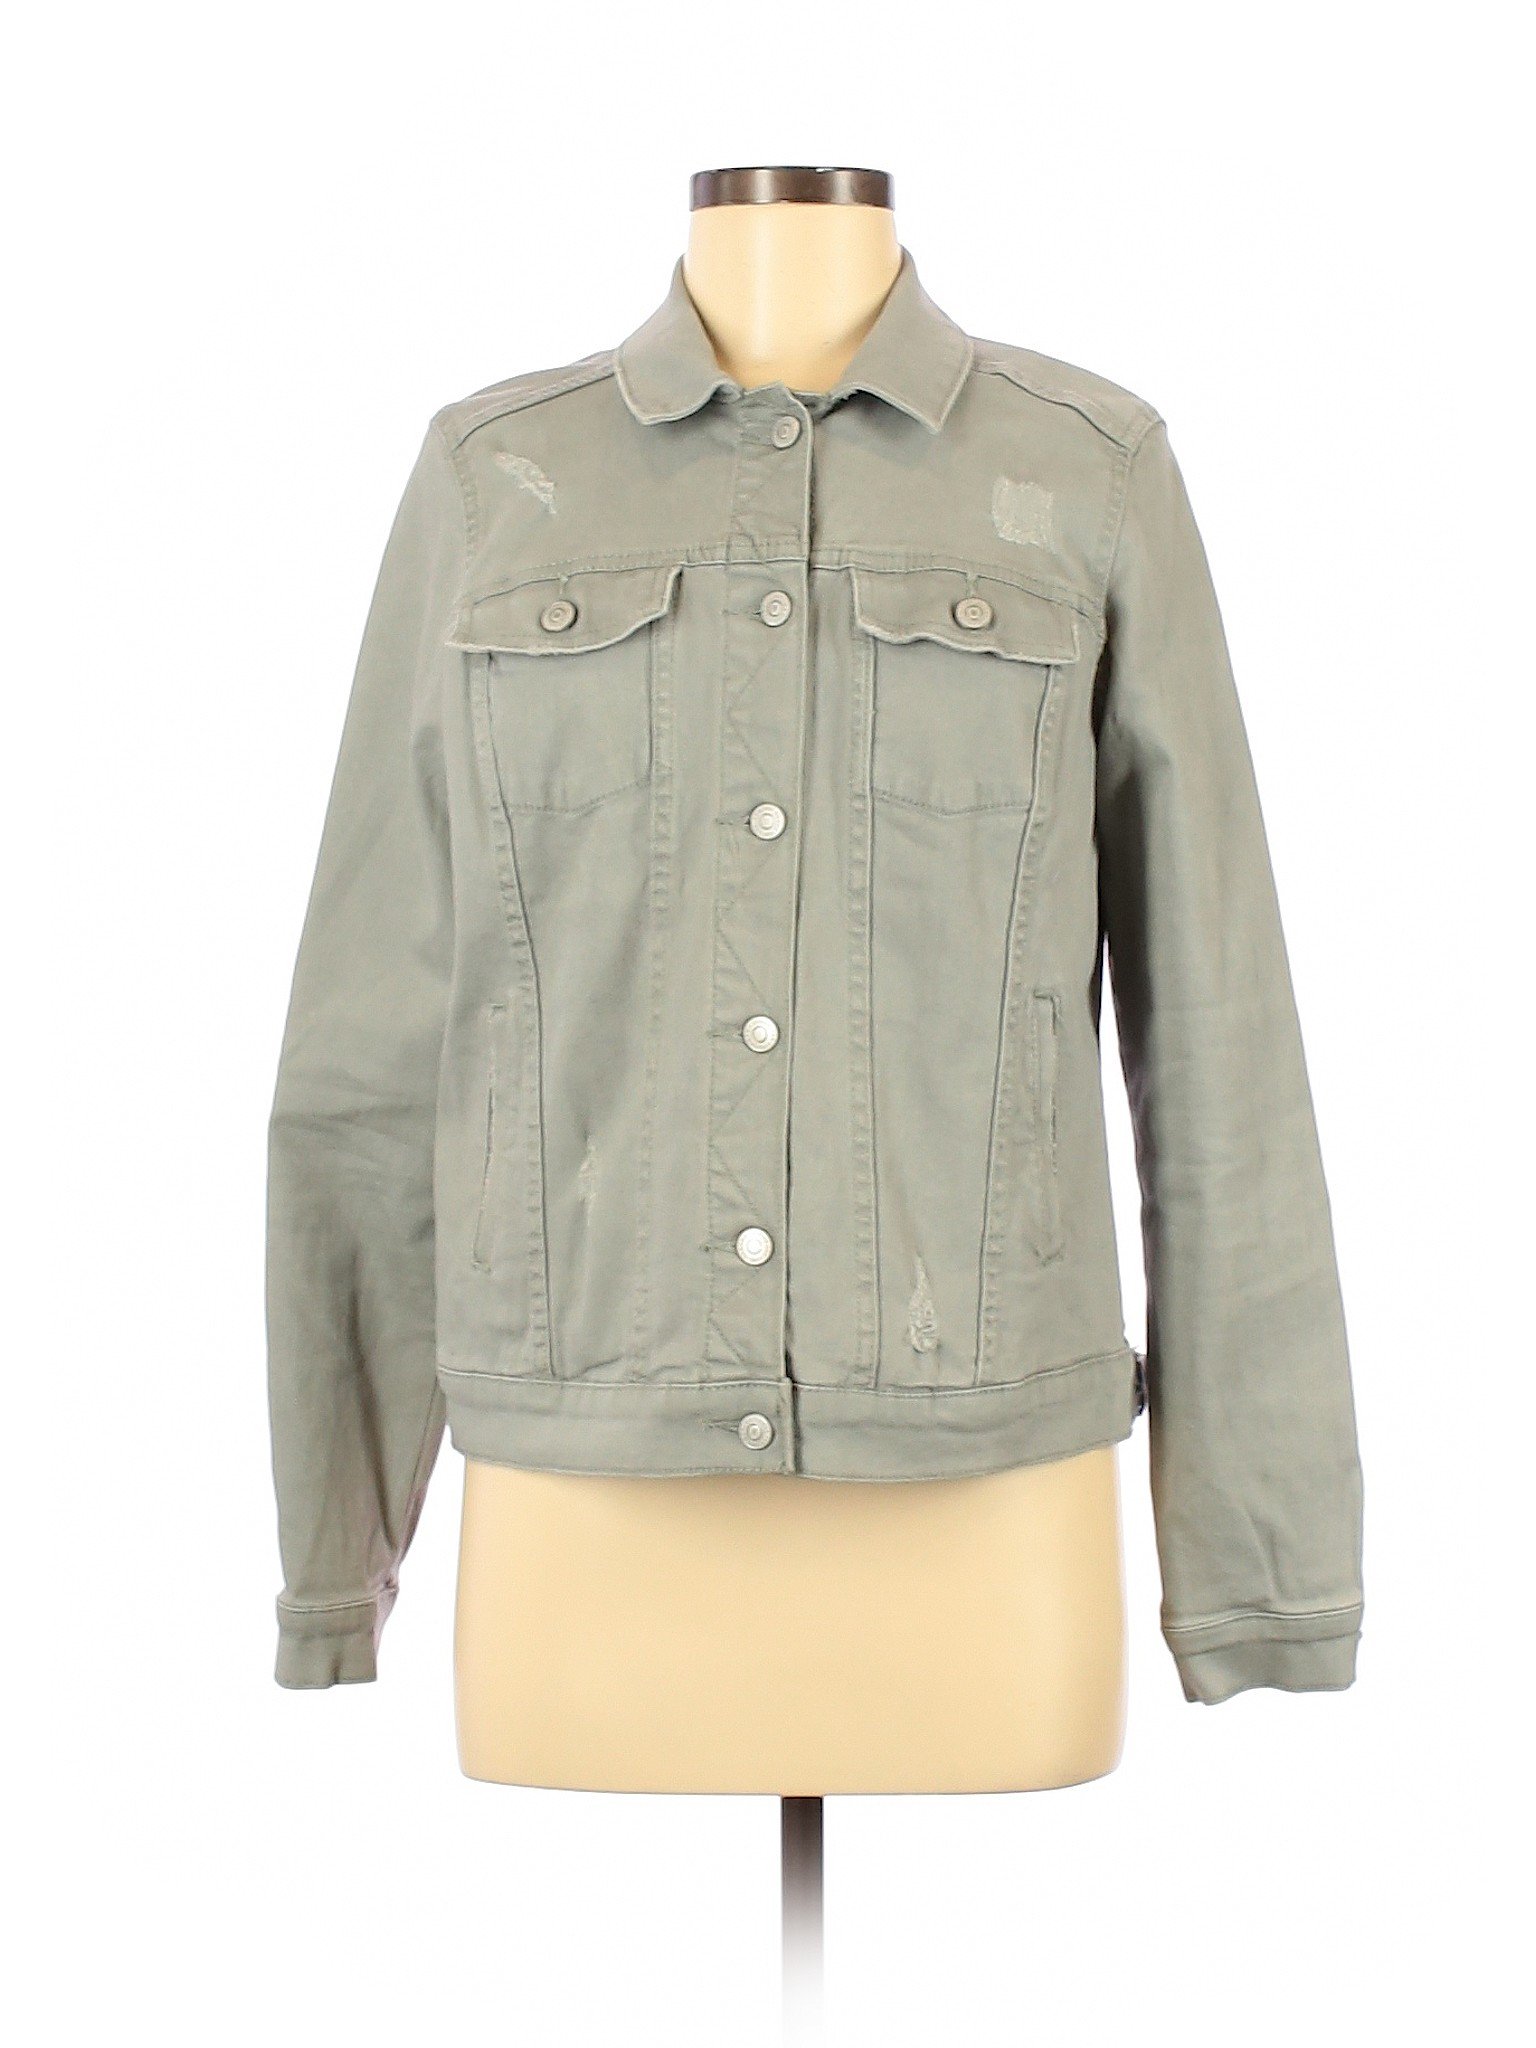 NWT Sonoma Goods for Life Women Gray Denim Jacket S | eBay